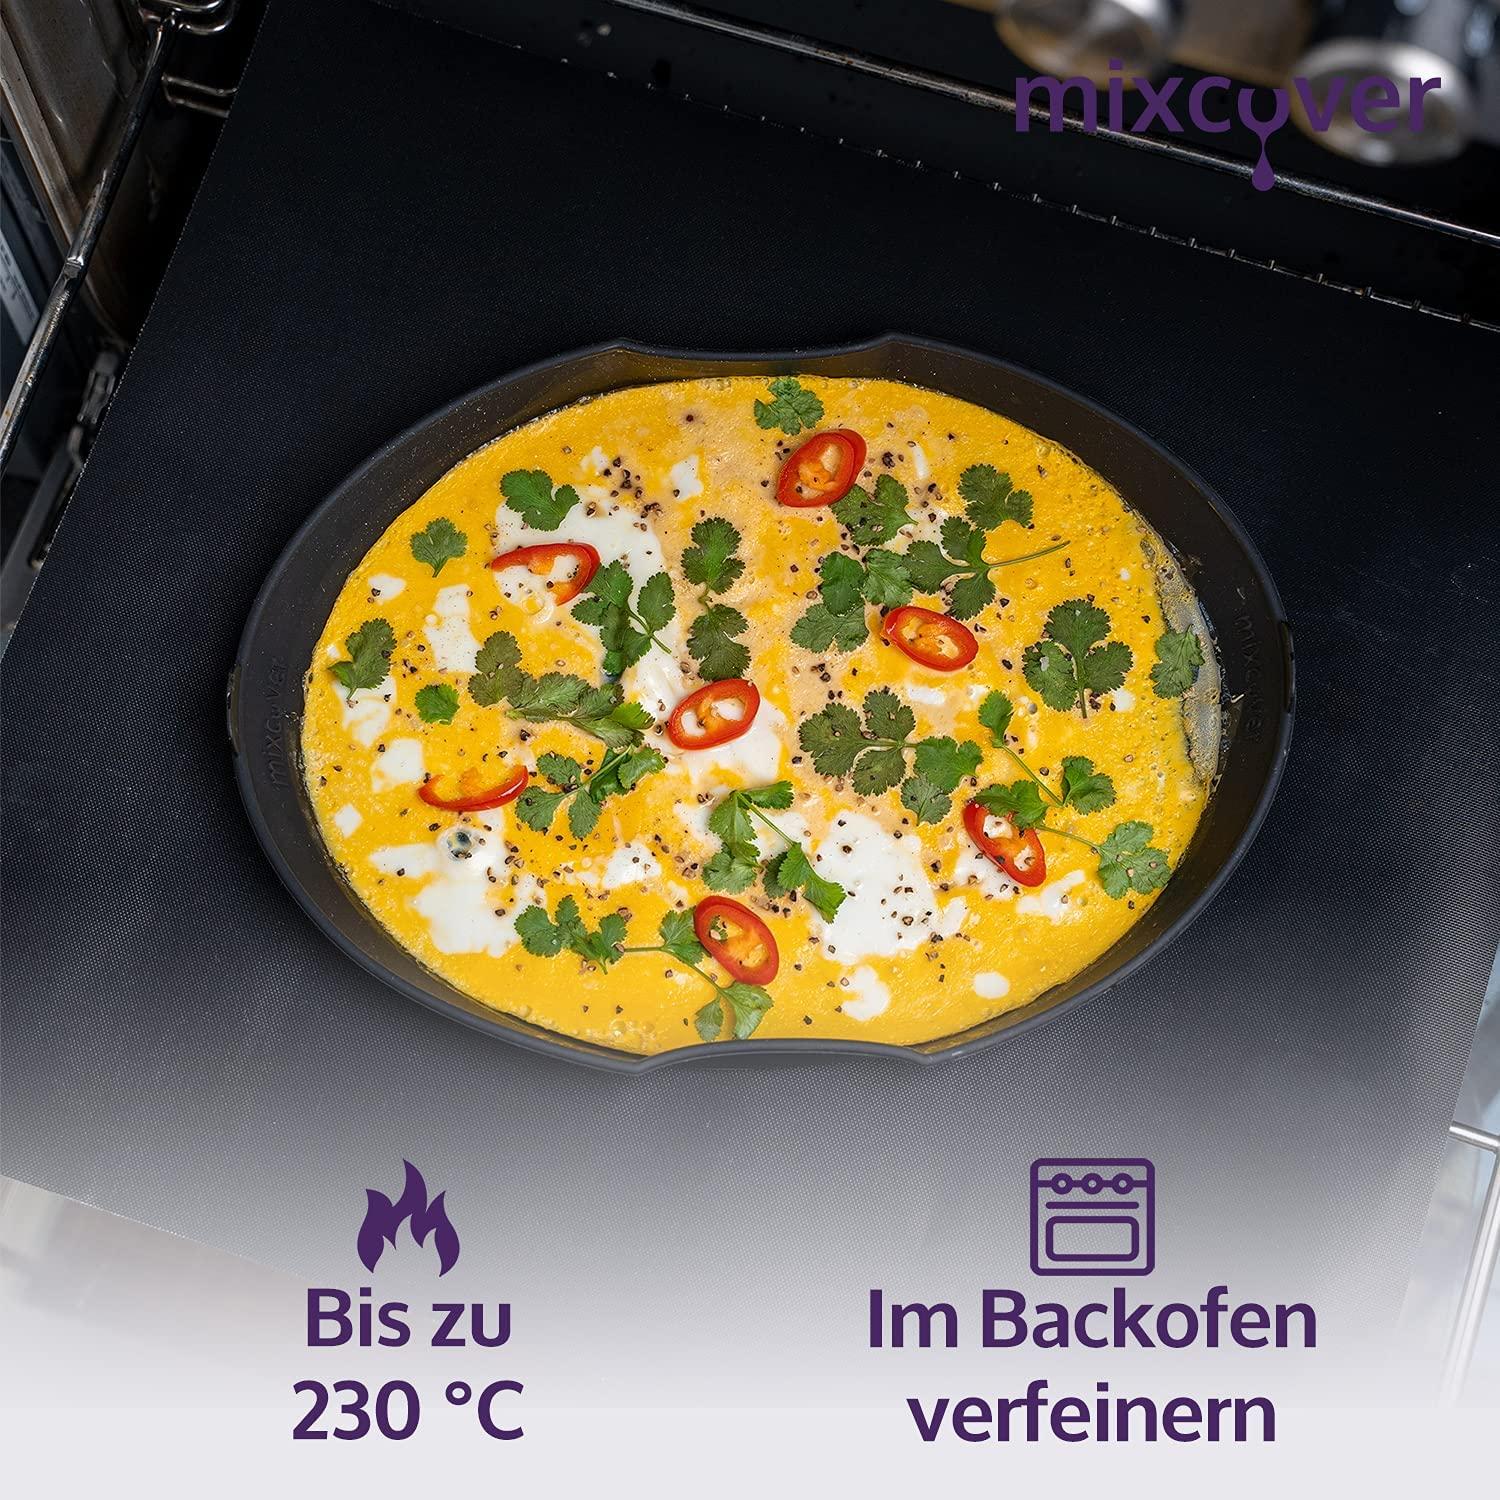 mixcover Dampfgarform Silikonform Auflaufform für Bosch Cookit Dampfgarraum - Mixcover - Mixcover